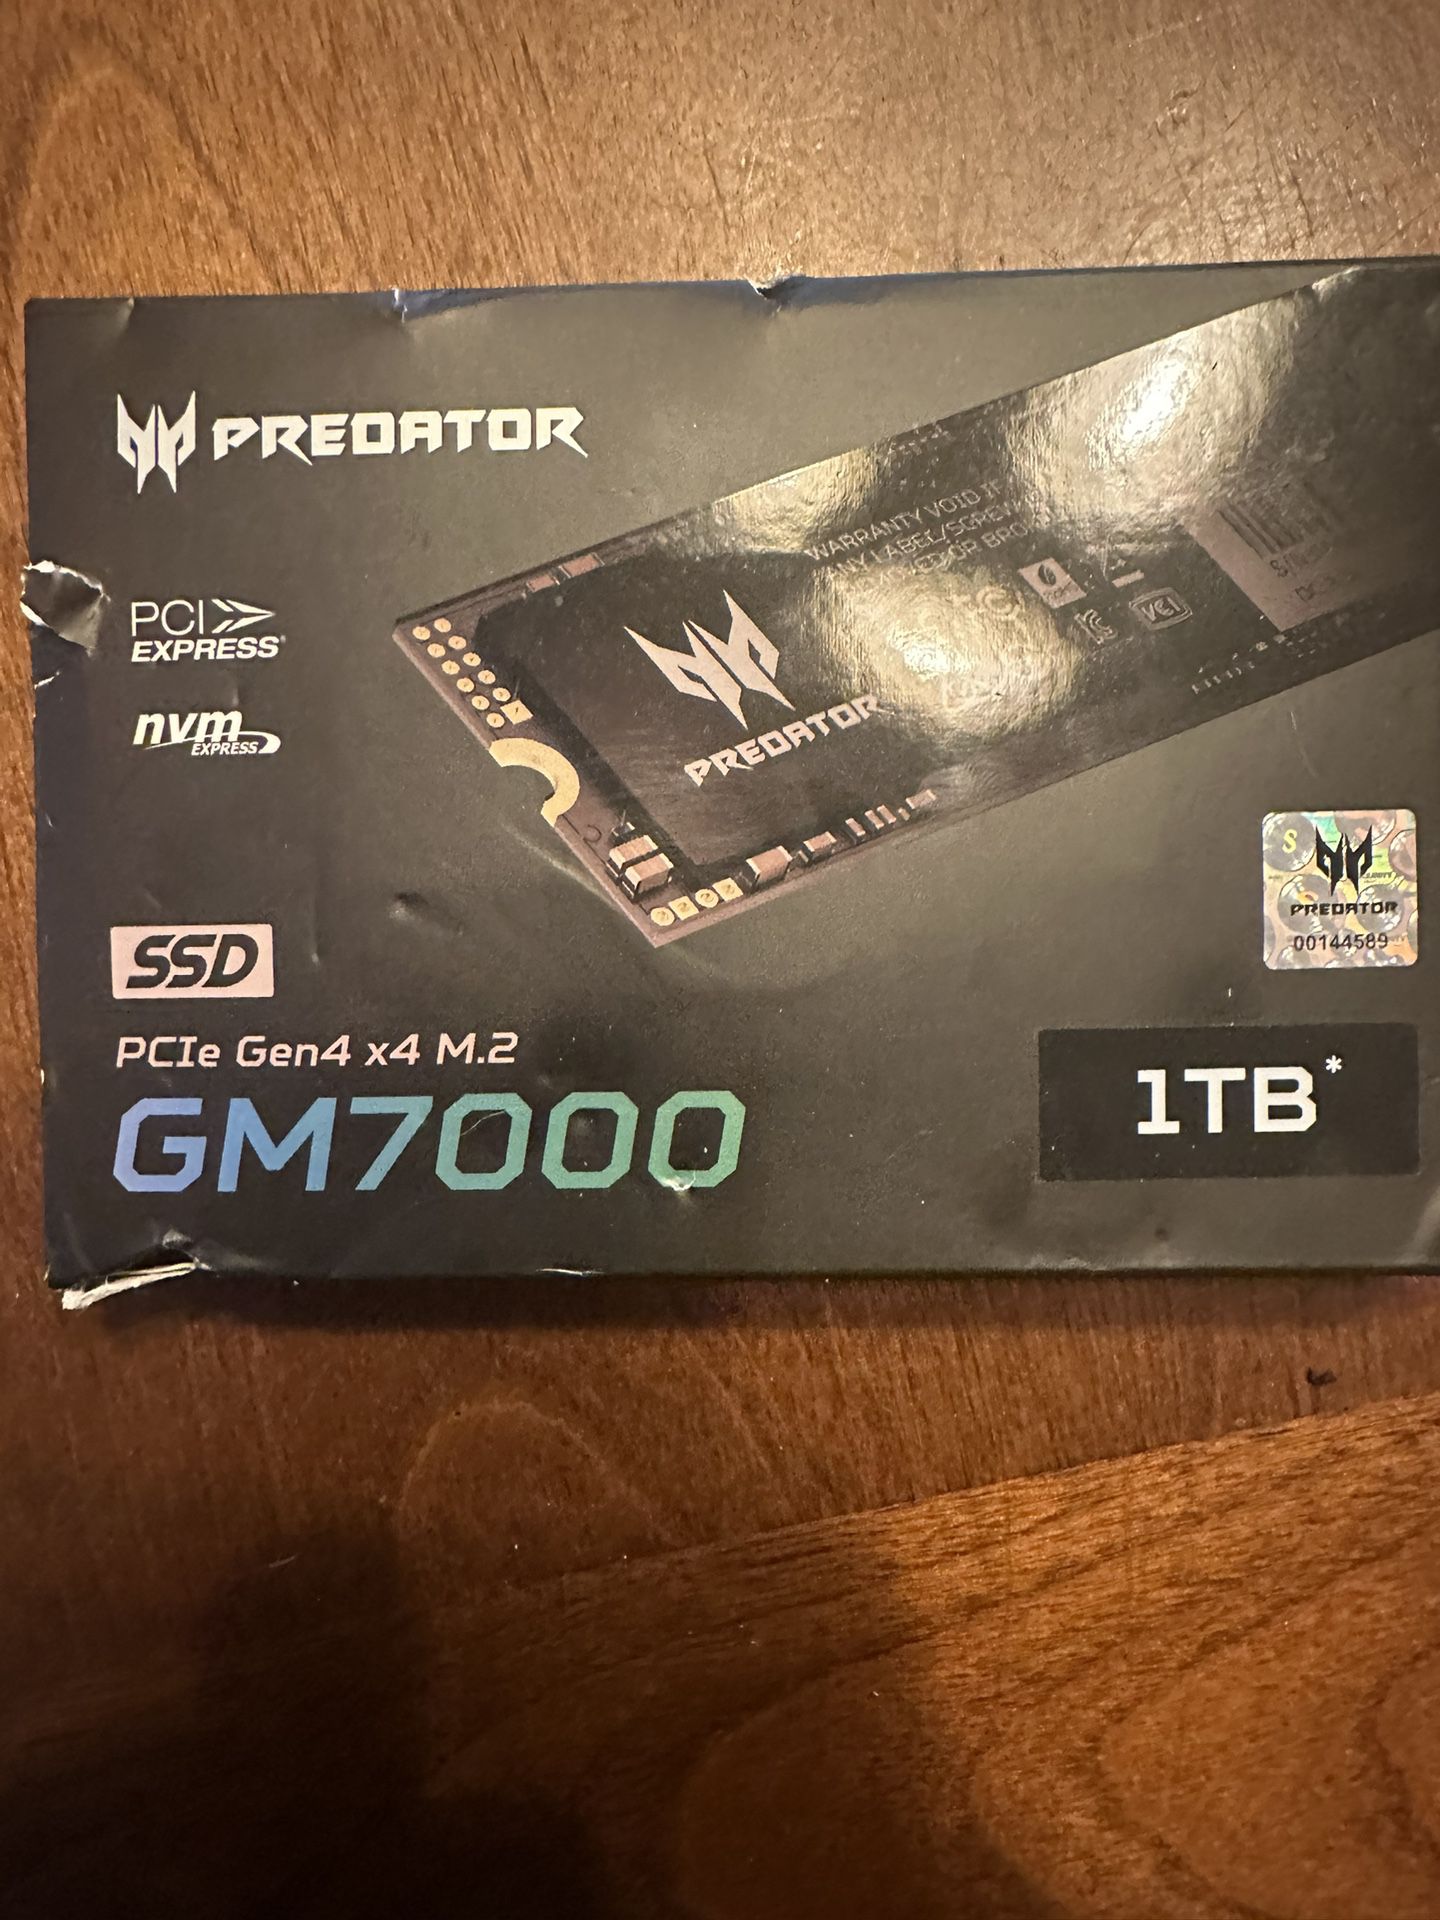 Predator GM7000 1TB